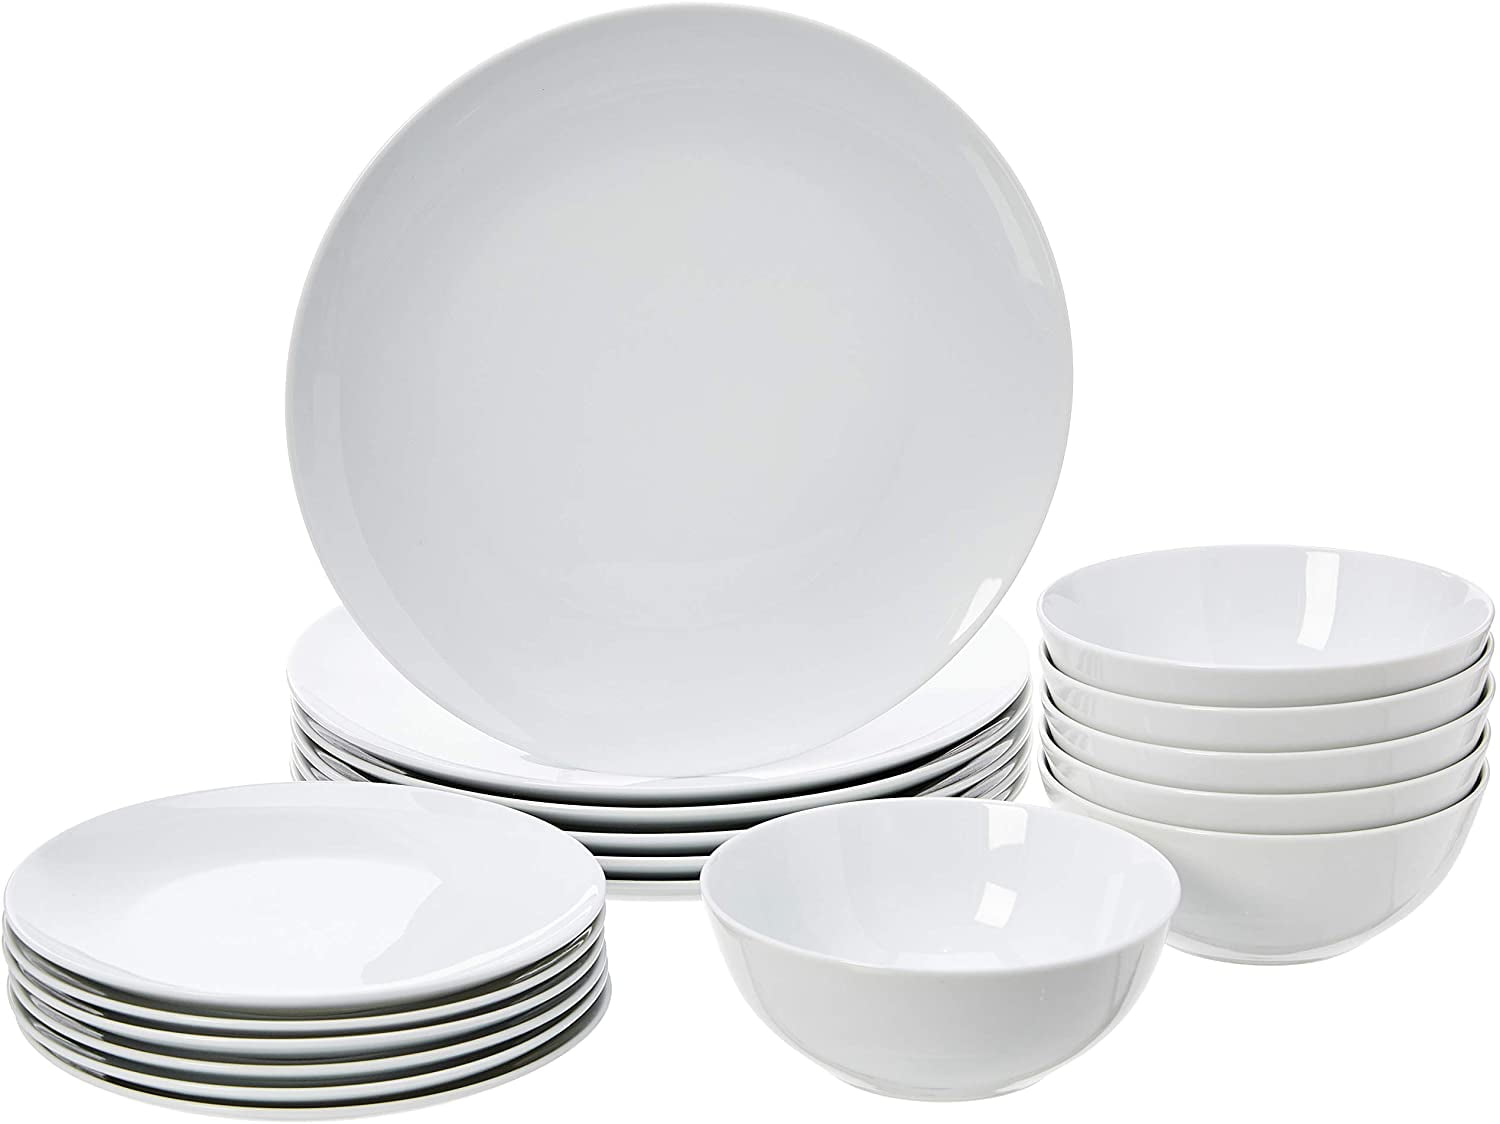 Dinnerware Set 18 Piece Plates Bowls White Porcelain Kitchen Service for 6